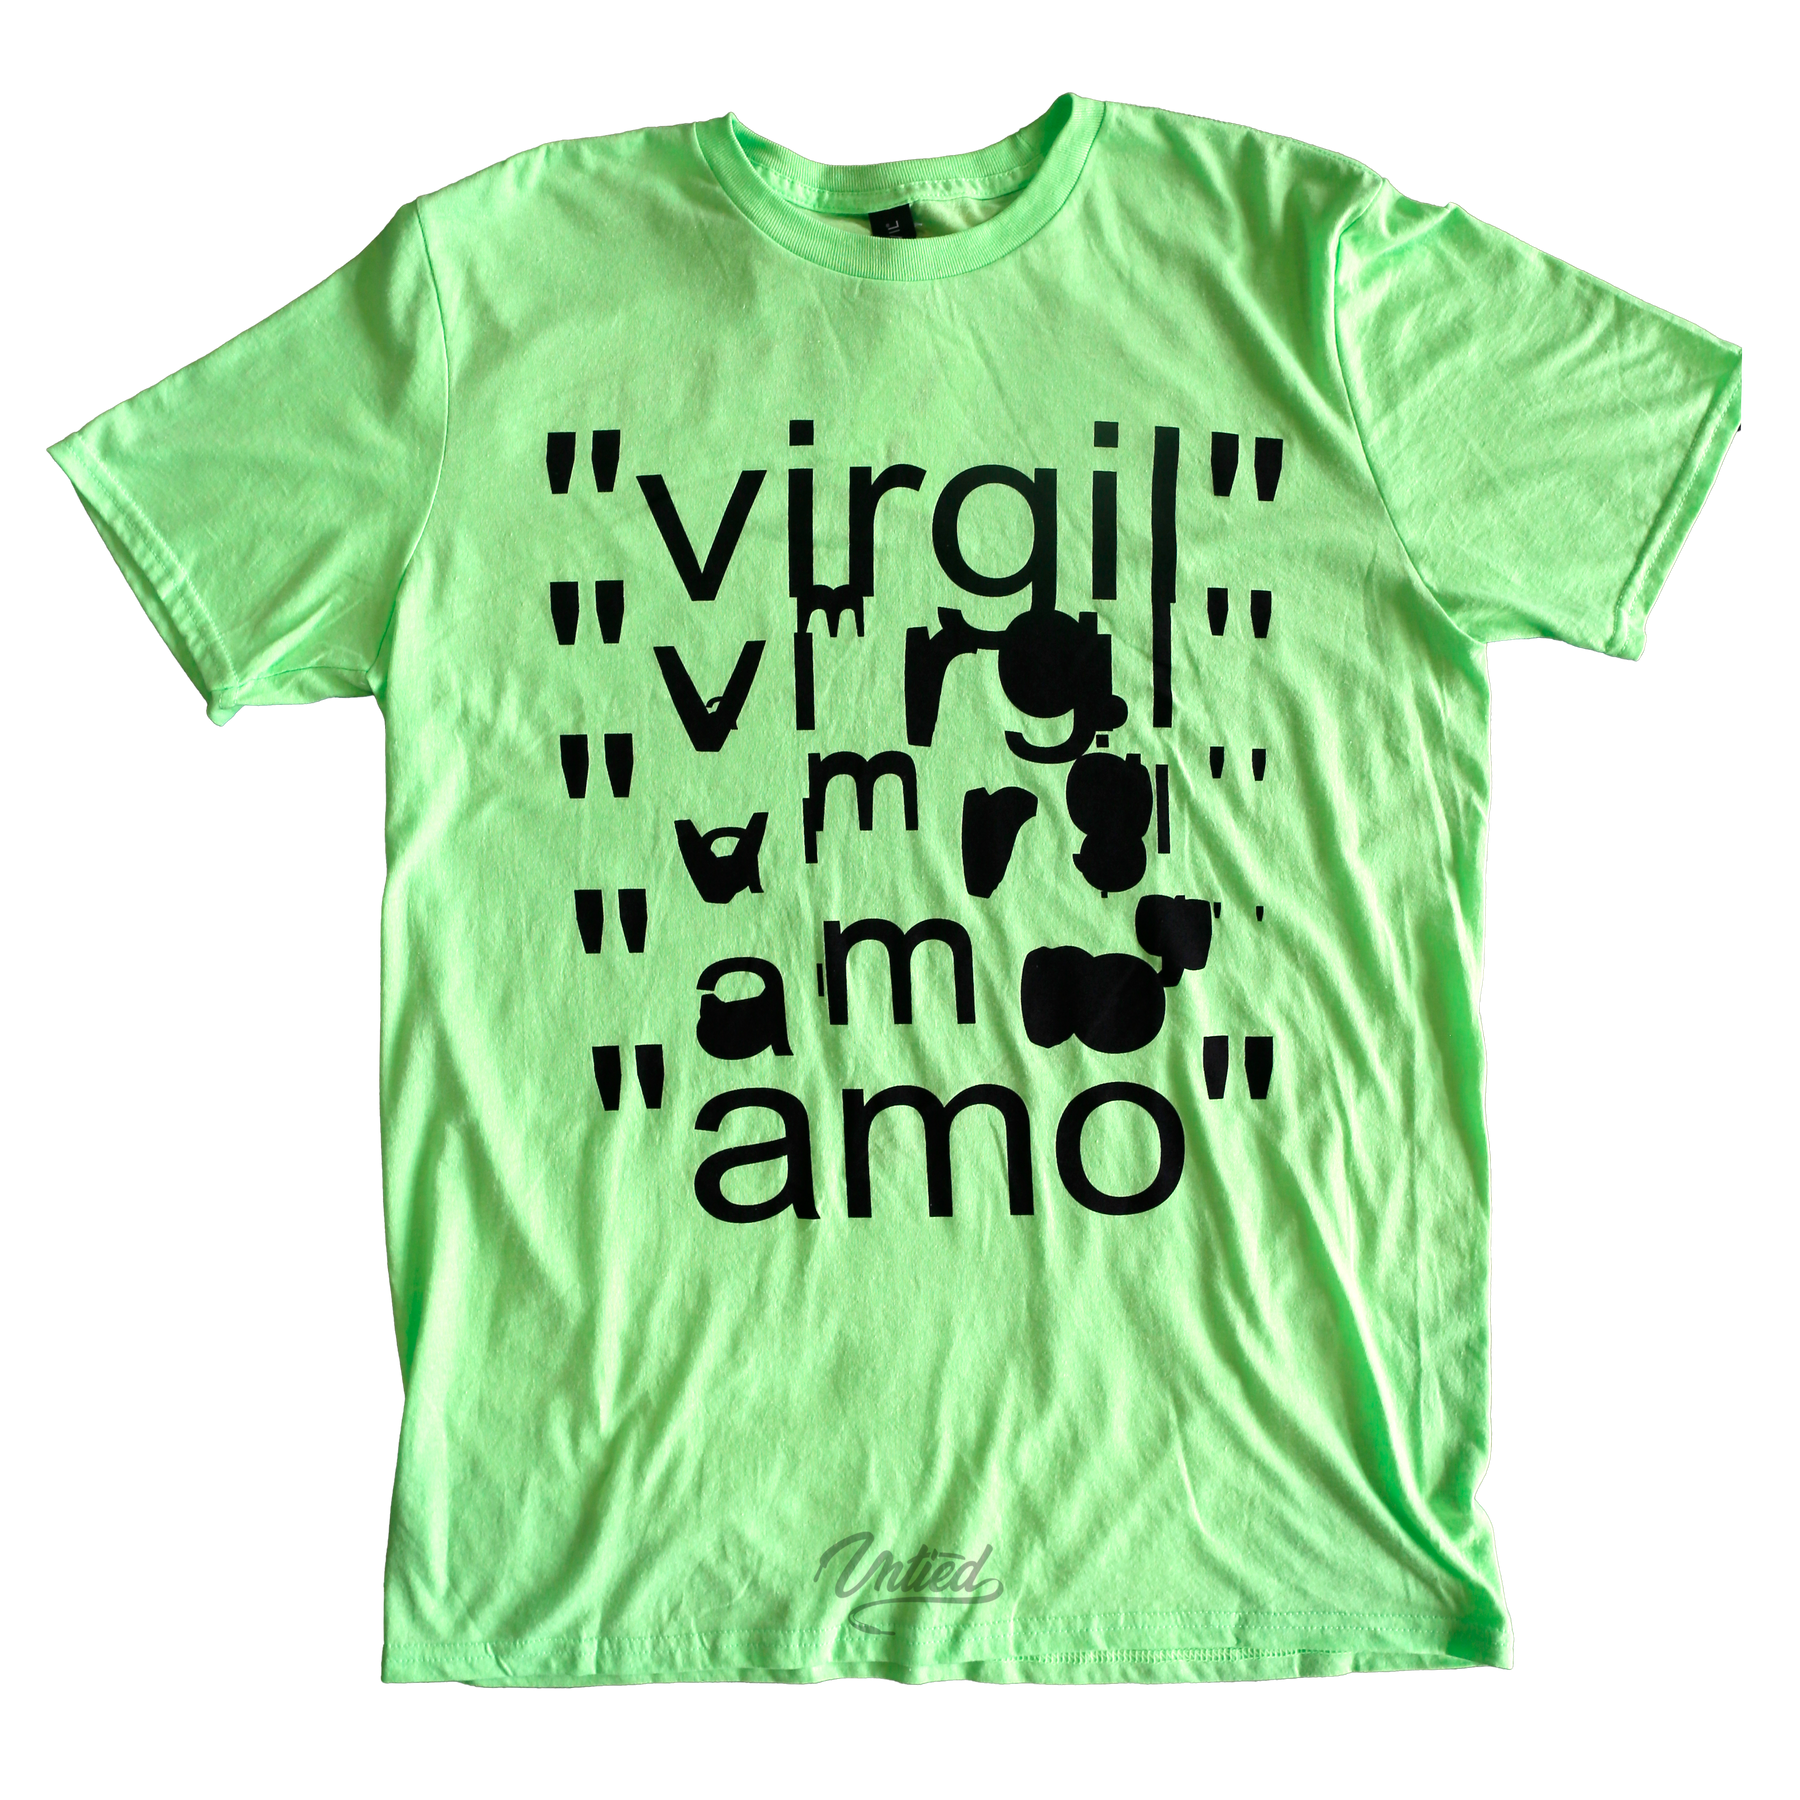 Virgil Abloh x MCA Amo Tee "Lime"